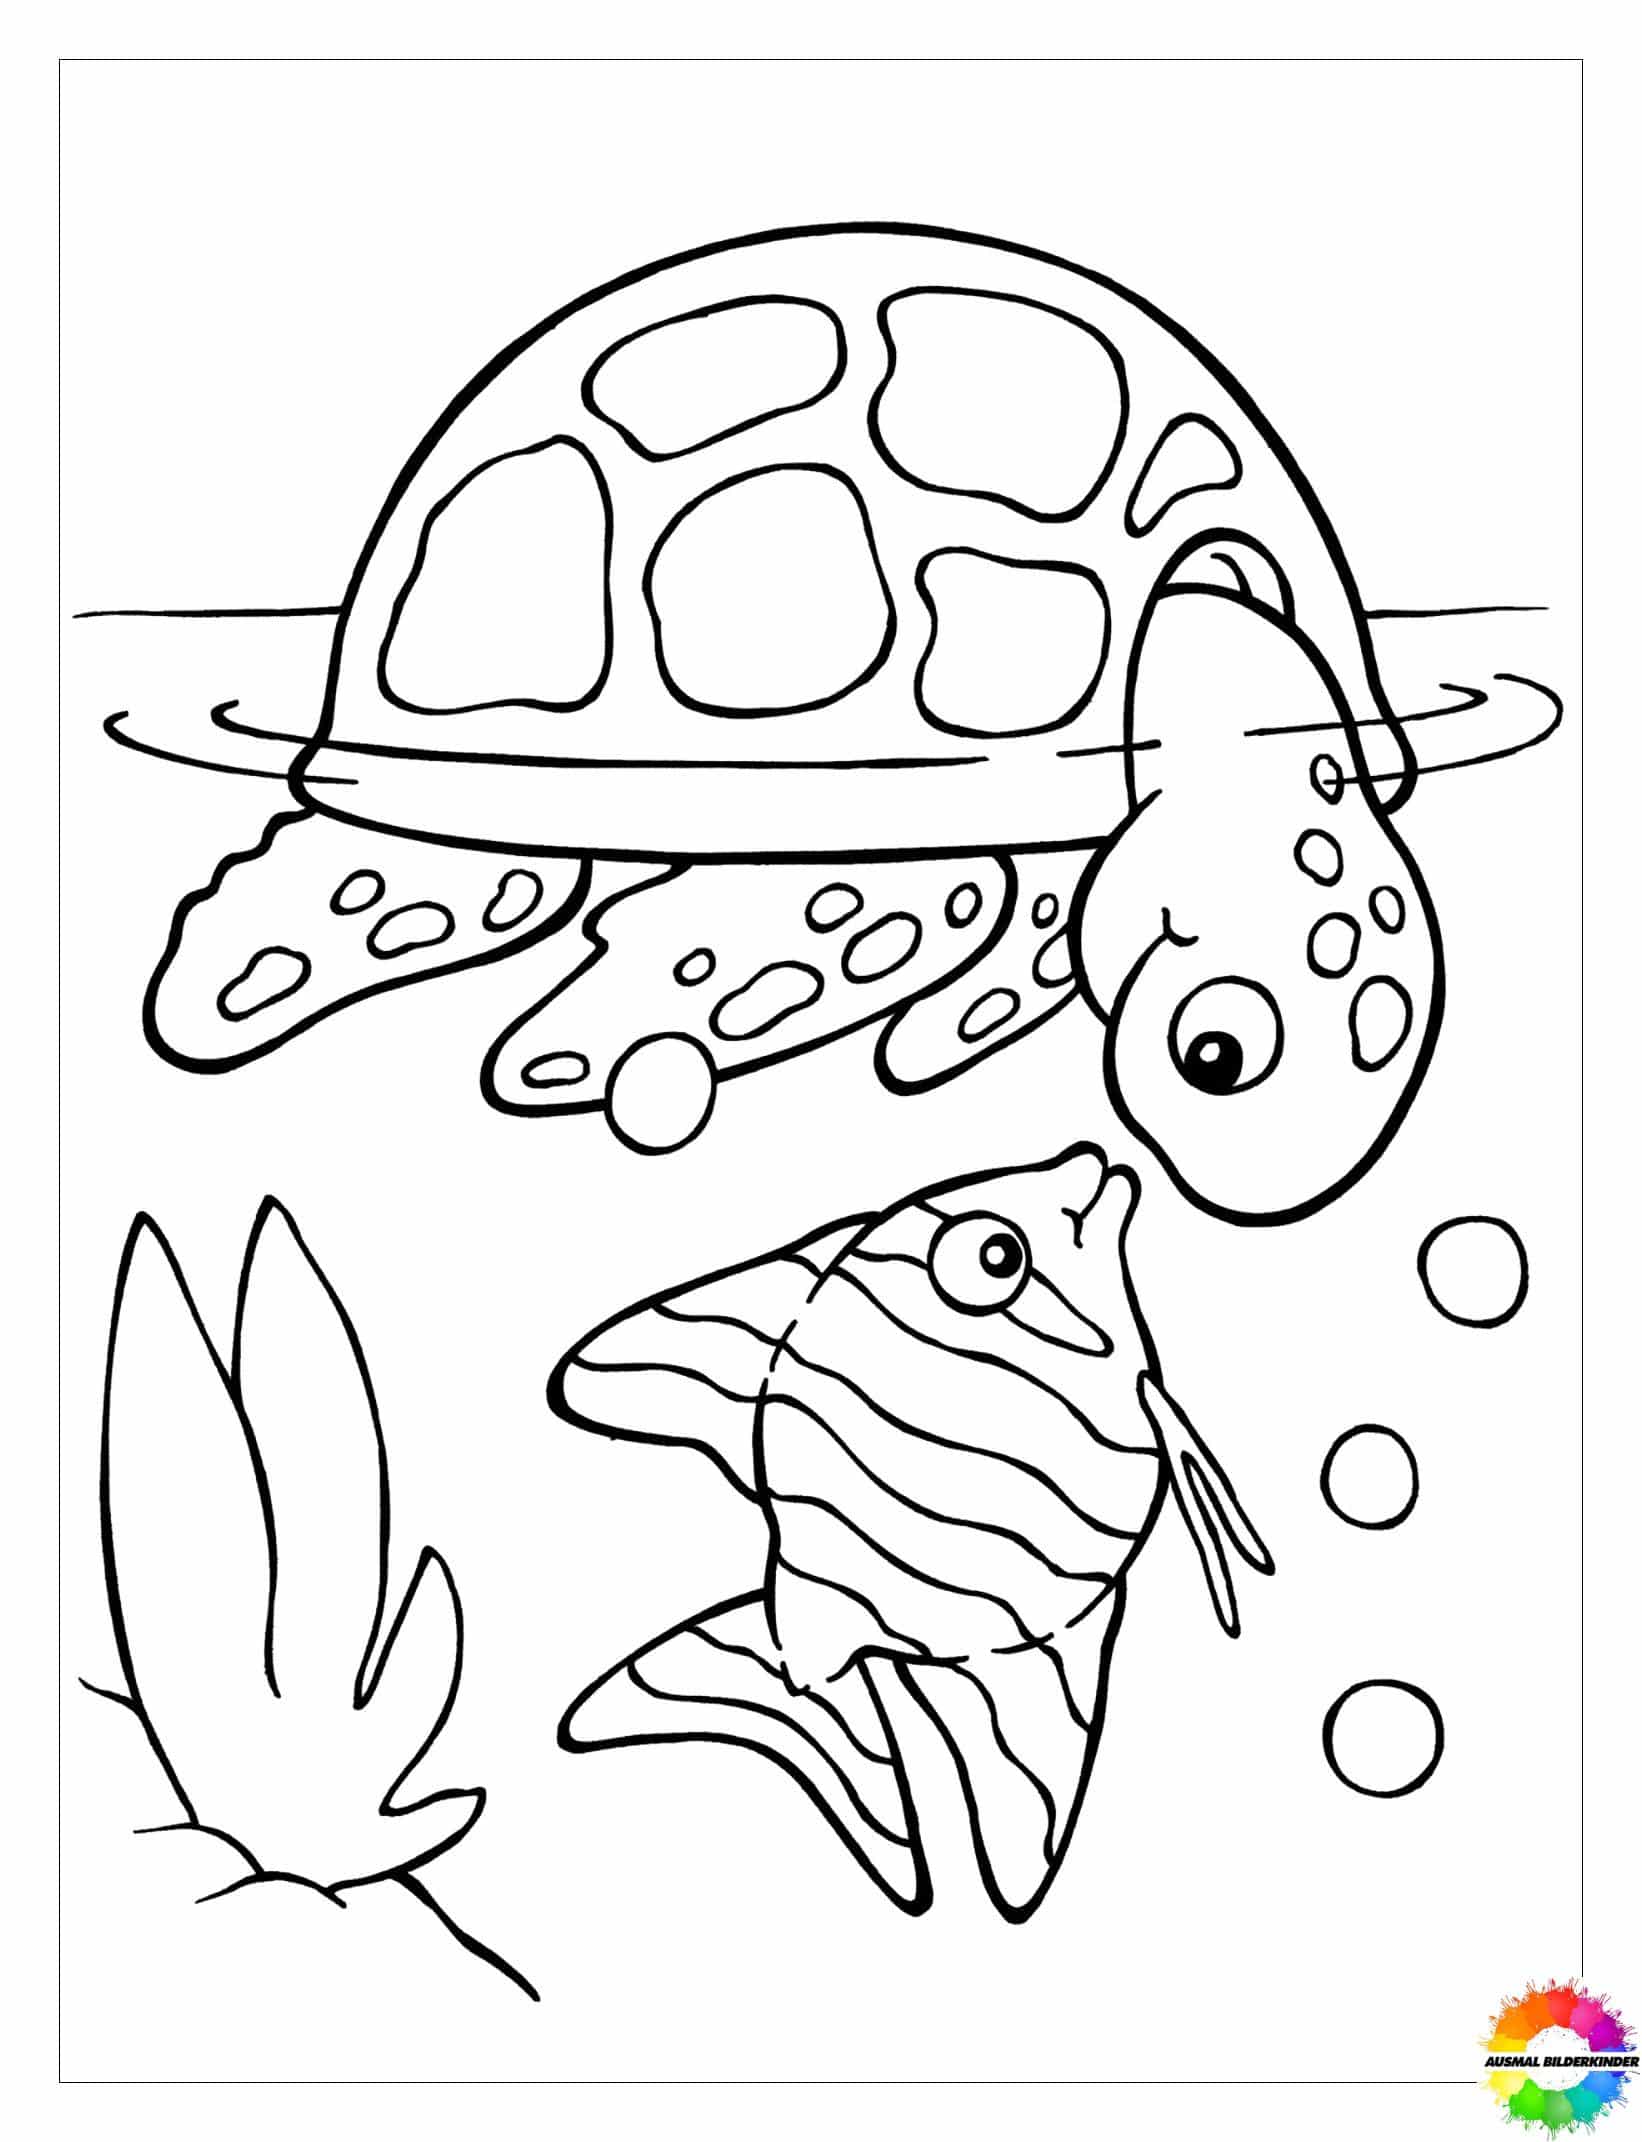 Schildkröte-Ausmalbilder-ausmalbilderkinder-de-5